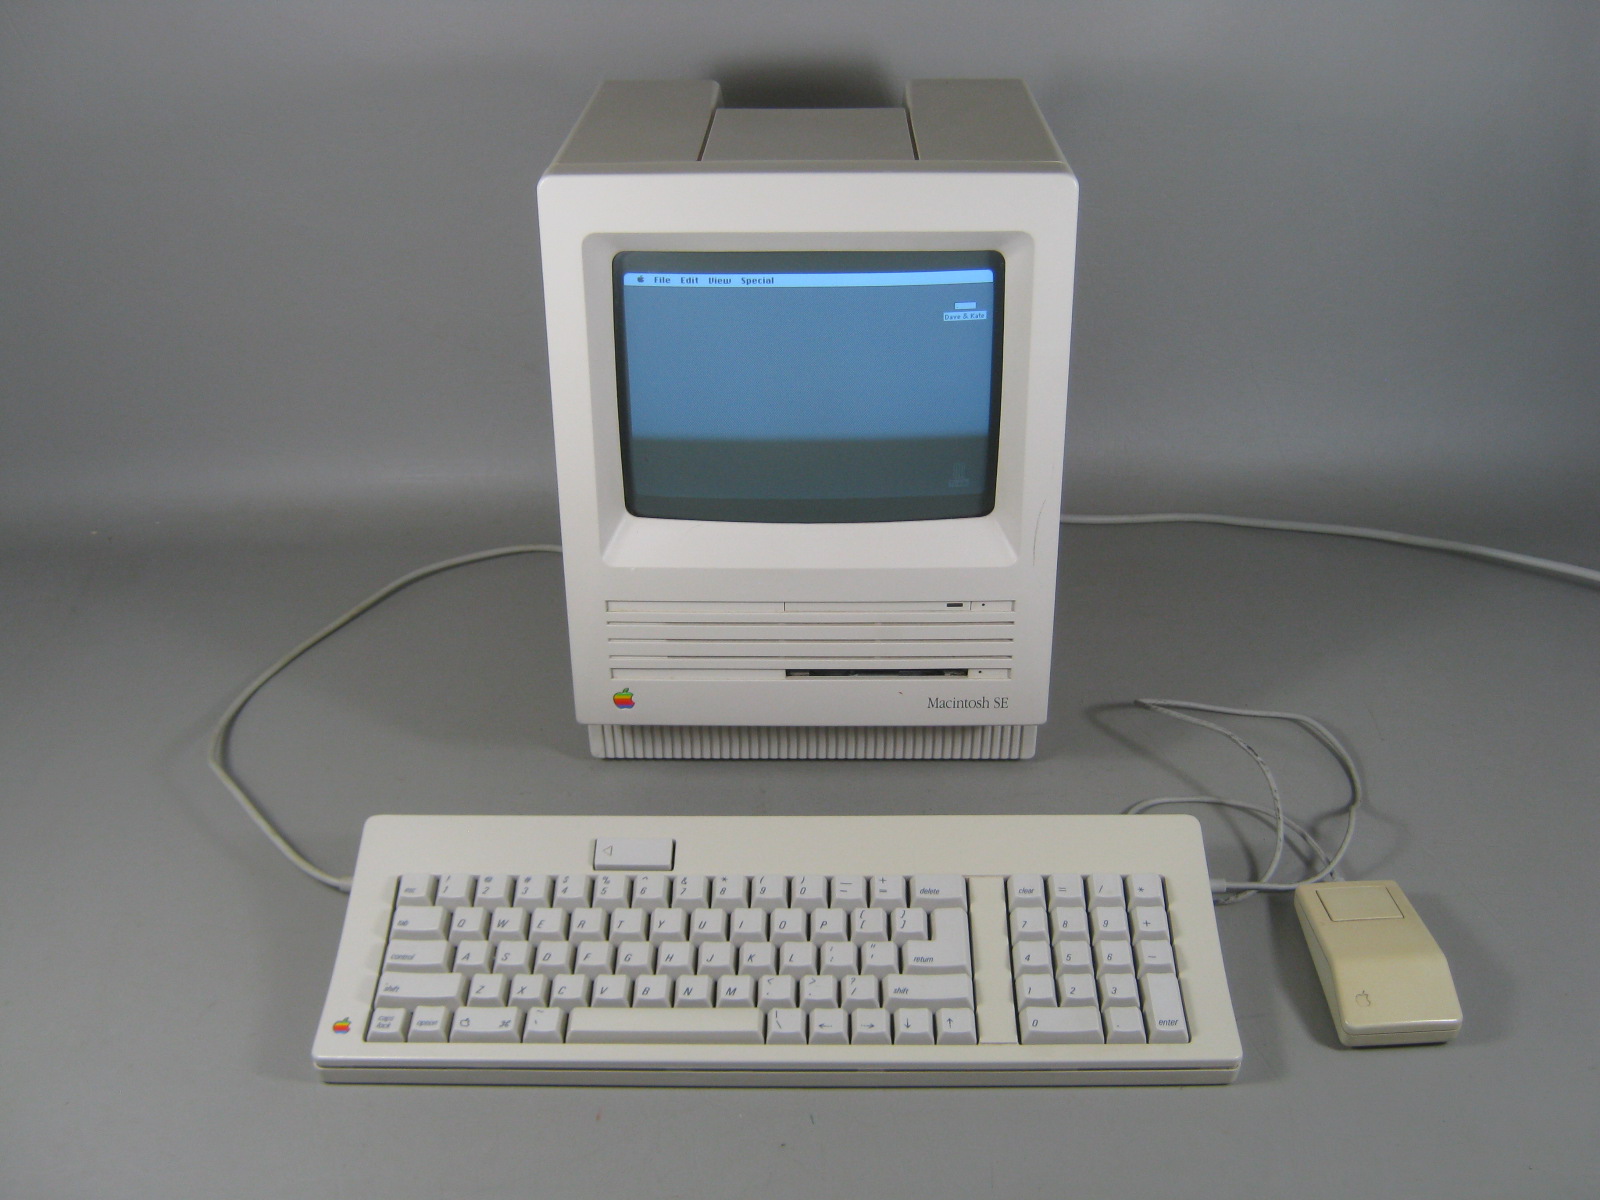 Vtg Apple Macintosh SE Desktop Computer 1MB Ram 800k Drive Mouse Keyboard In Box 1